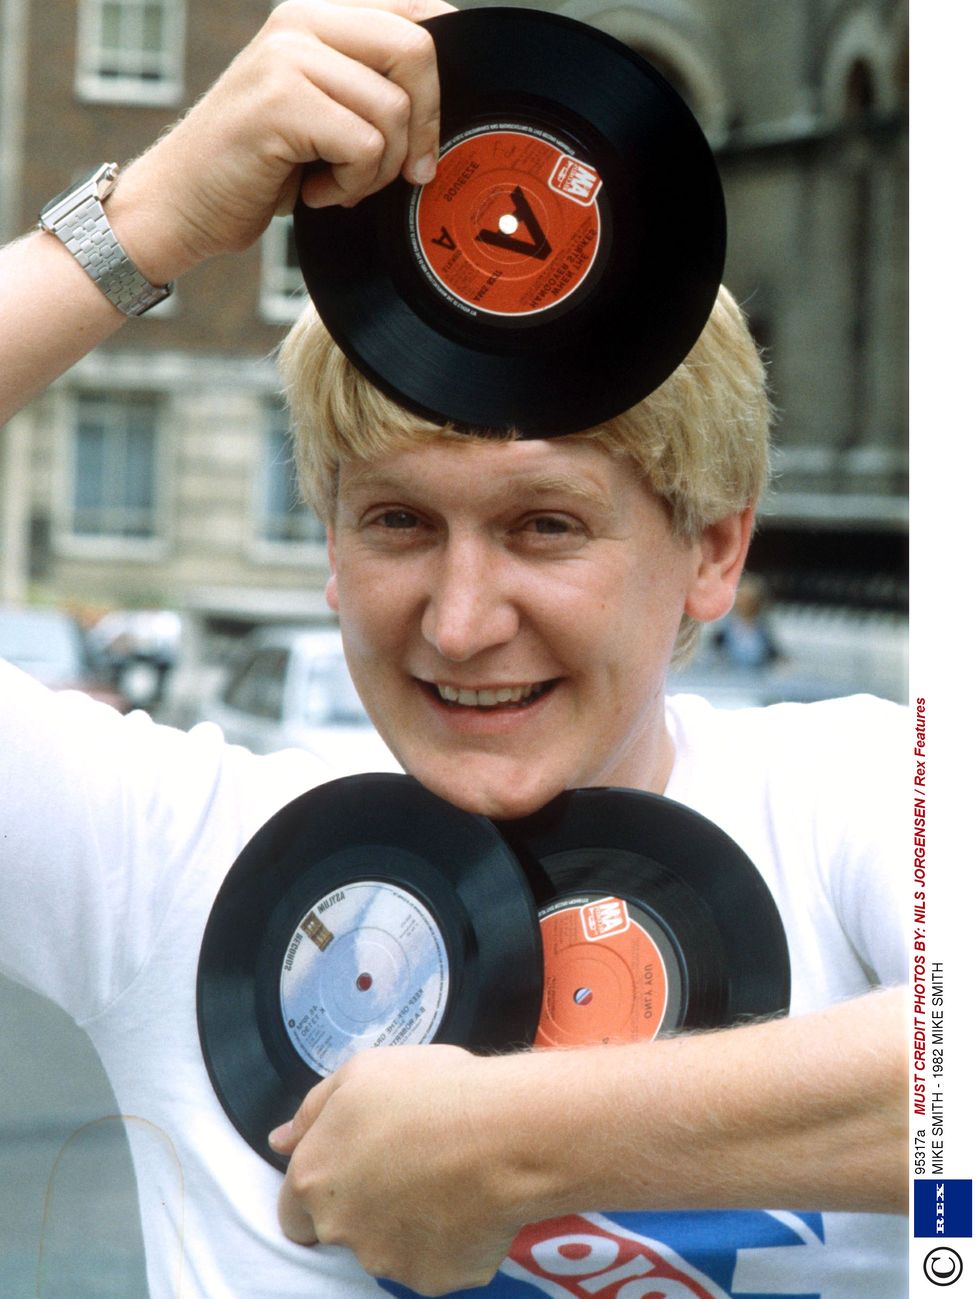 Former Radio 1 DJ Mike Smith dies